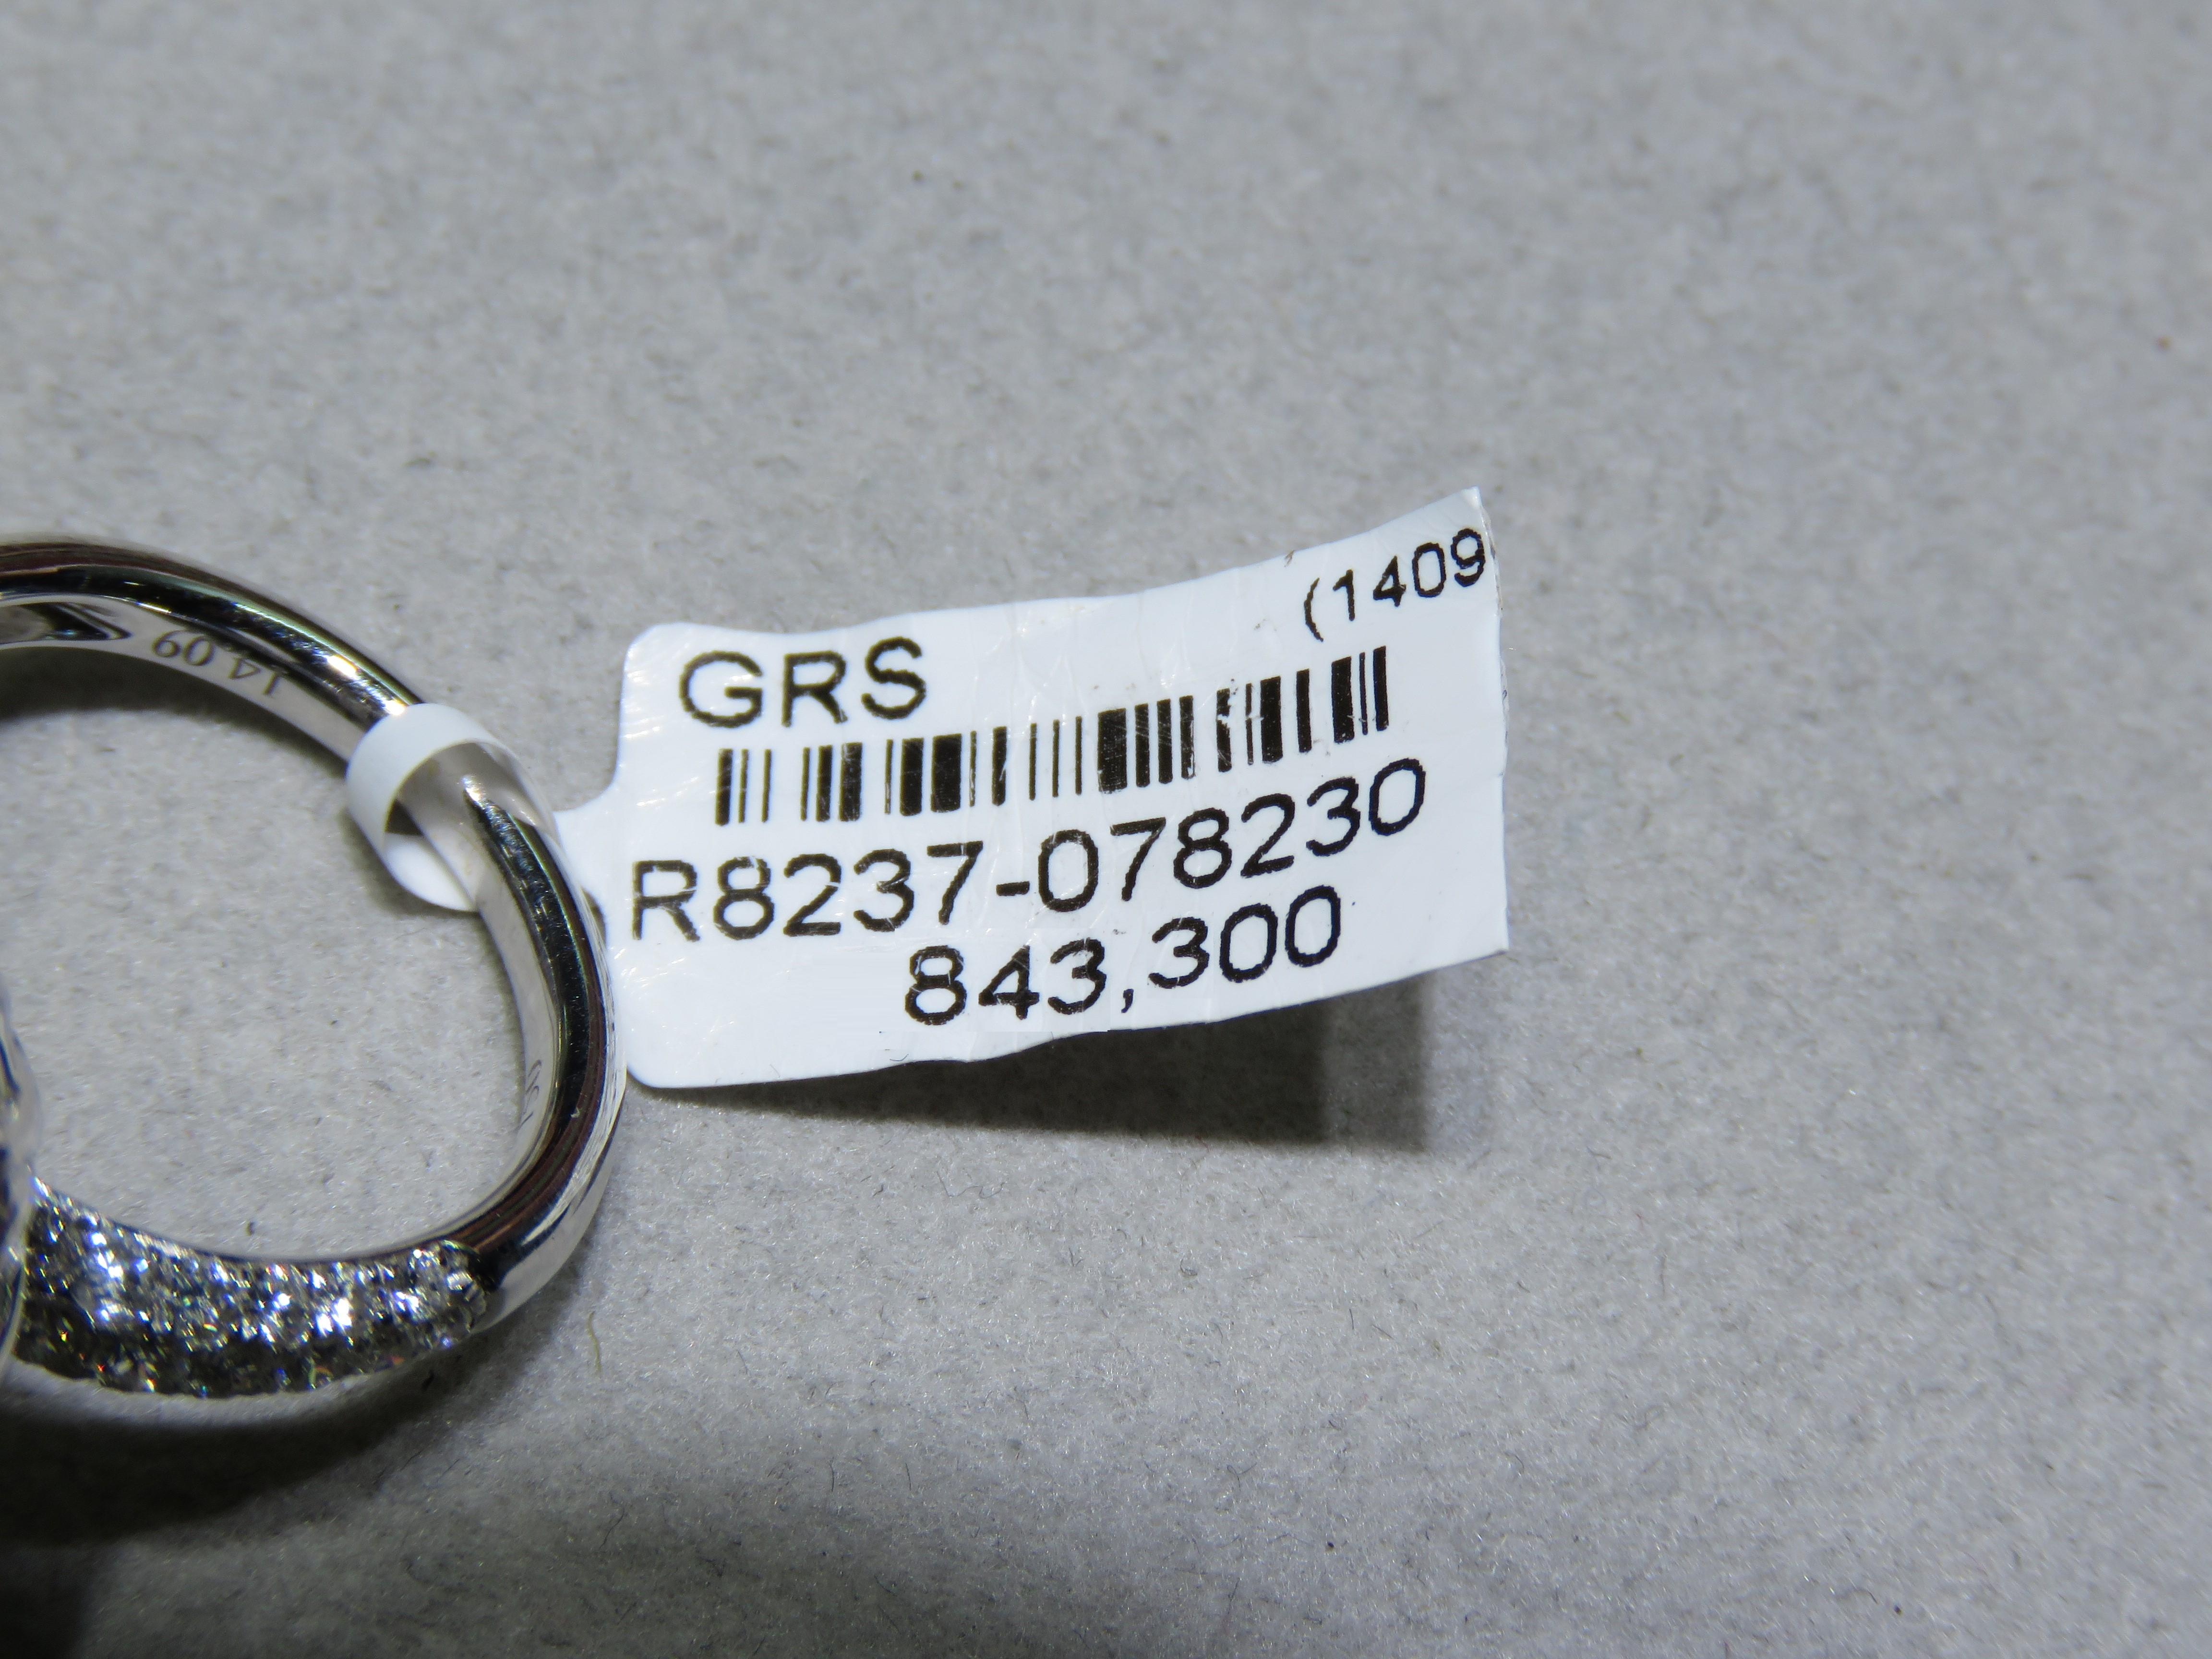 NWT $843, 300 18KT Gold Rare Large 20CT Ceylon Blue Sapphire Diamond Ring For Sale 1